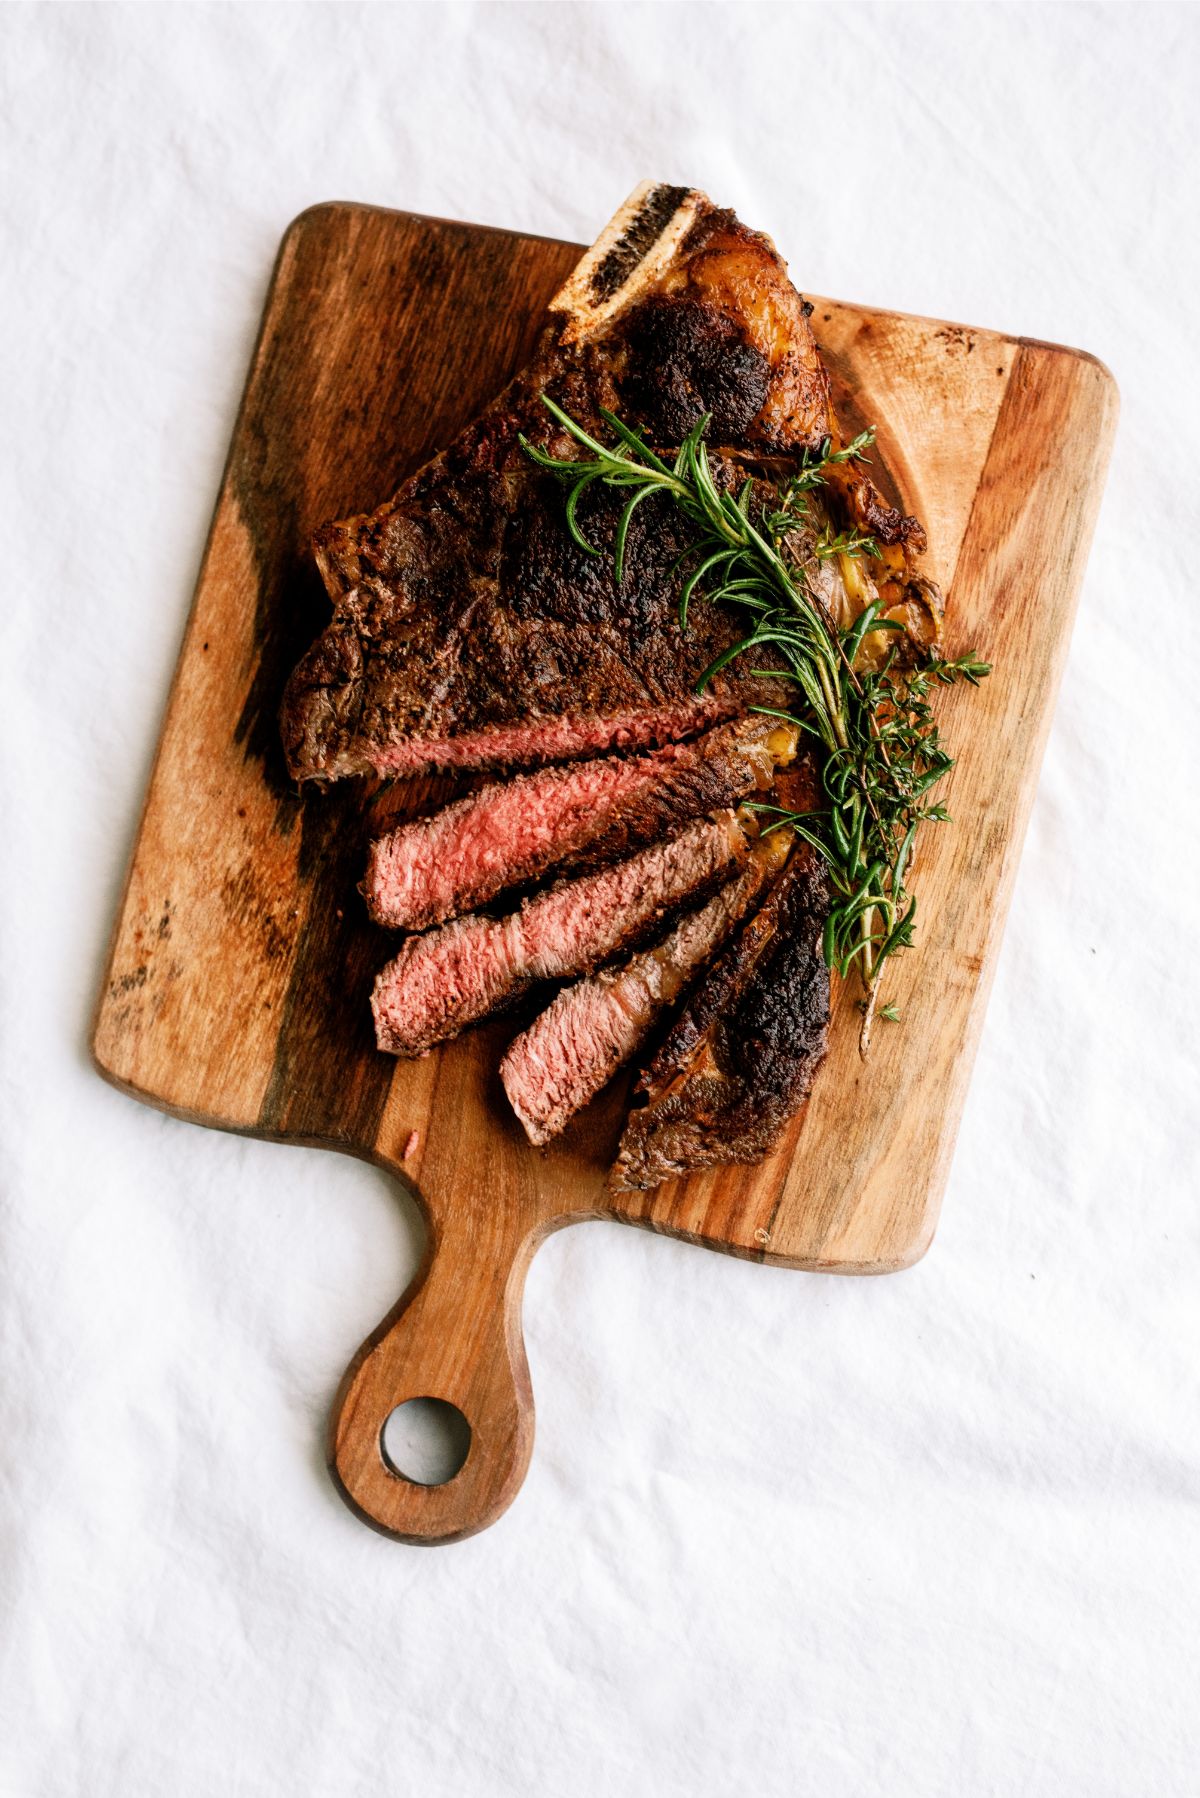 Bone New York Strip Steak grilled and sliced on a cutting board